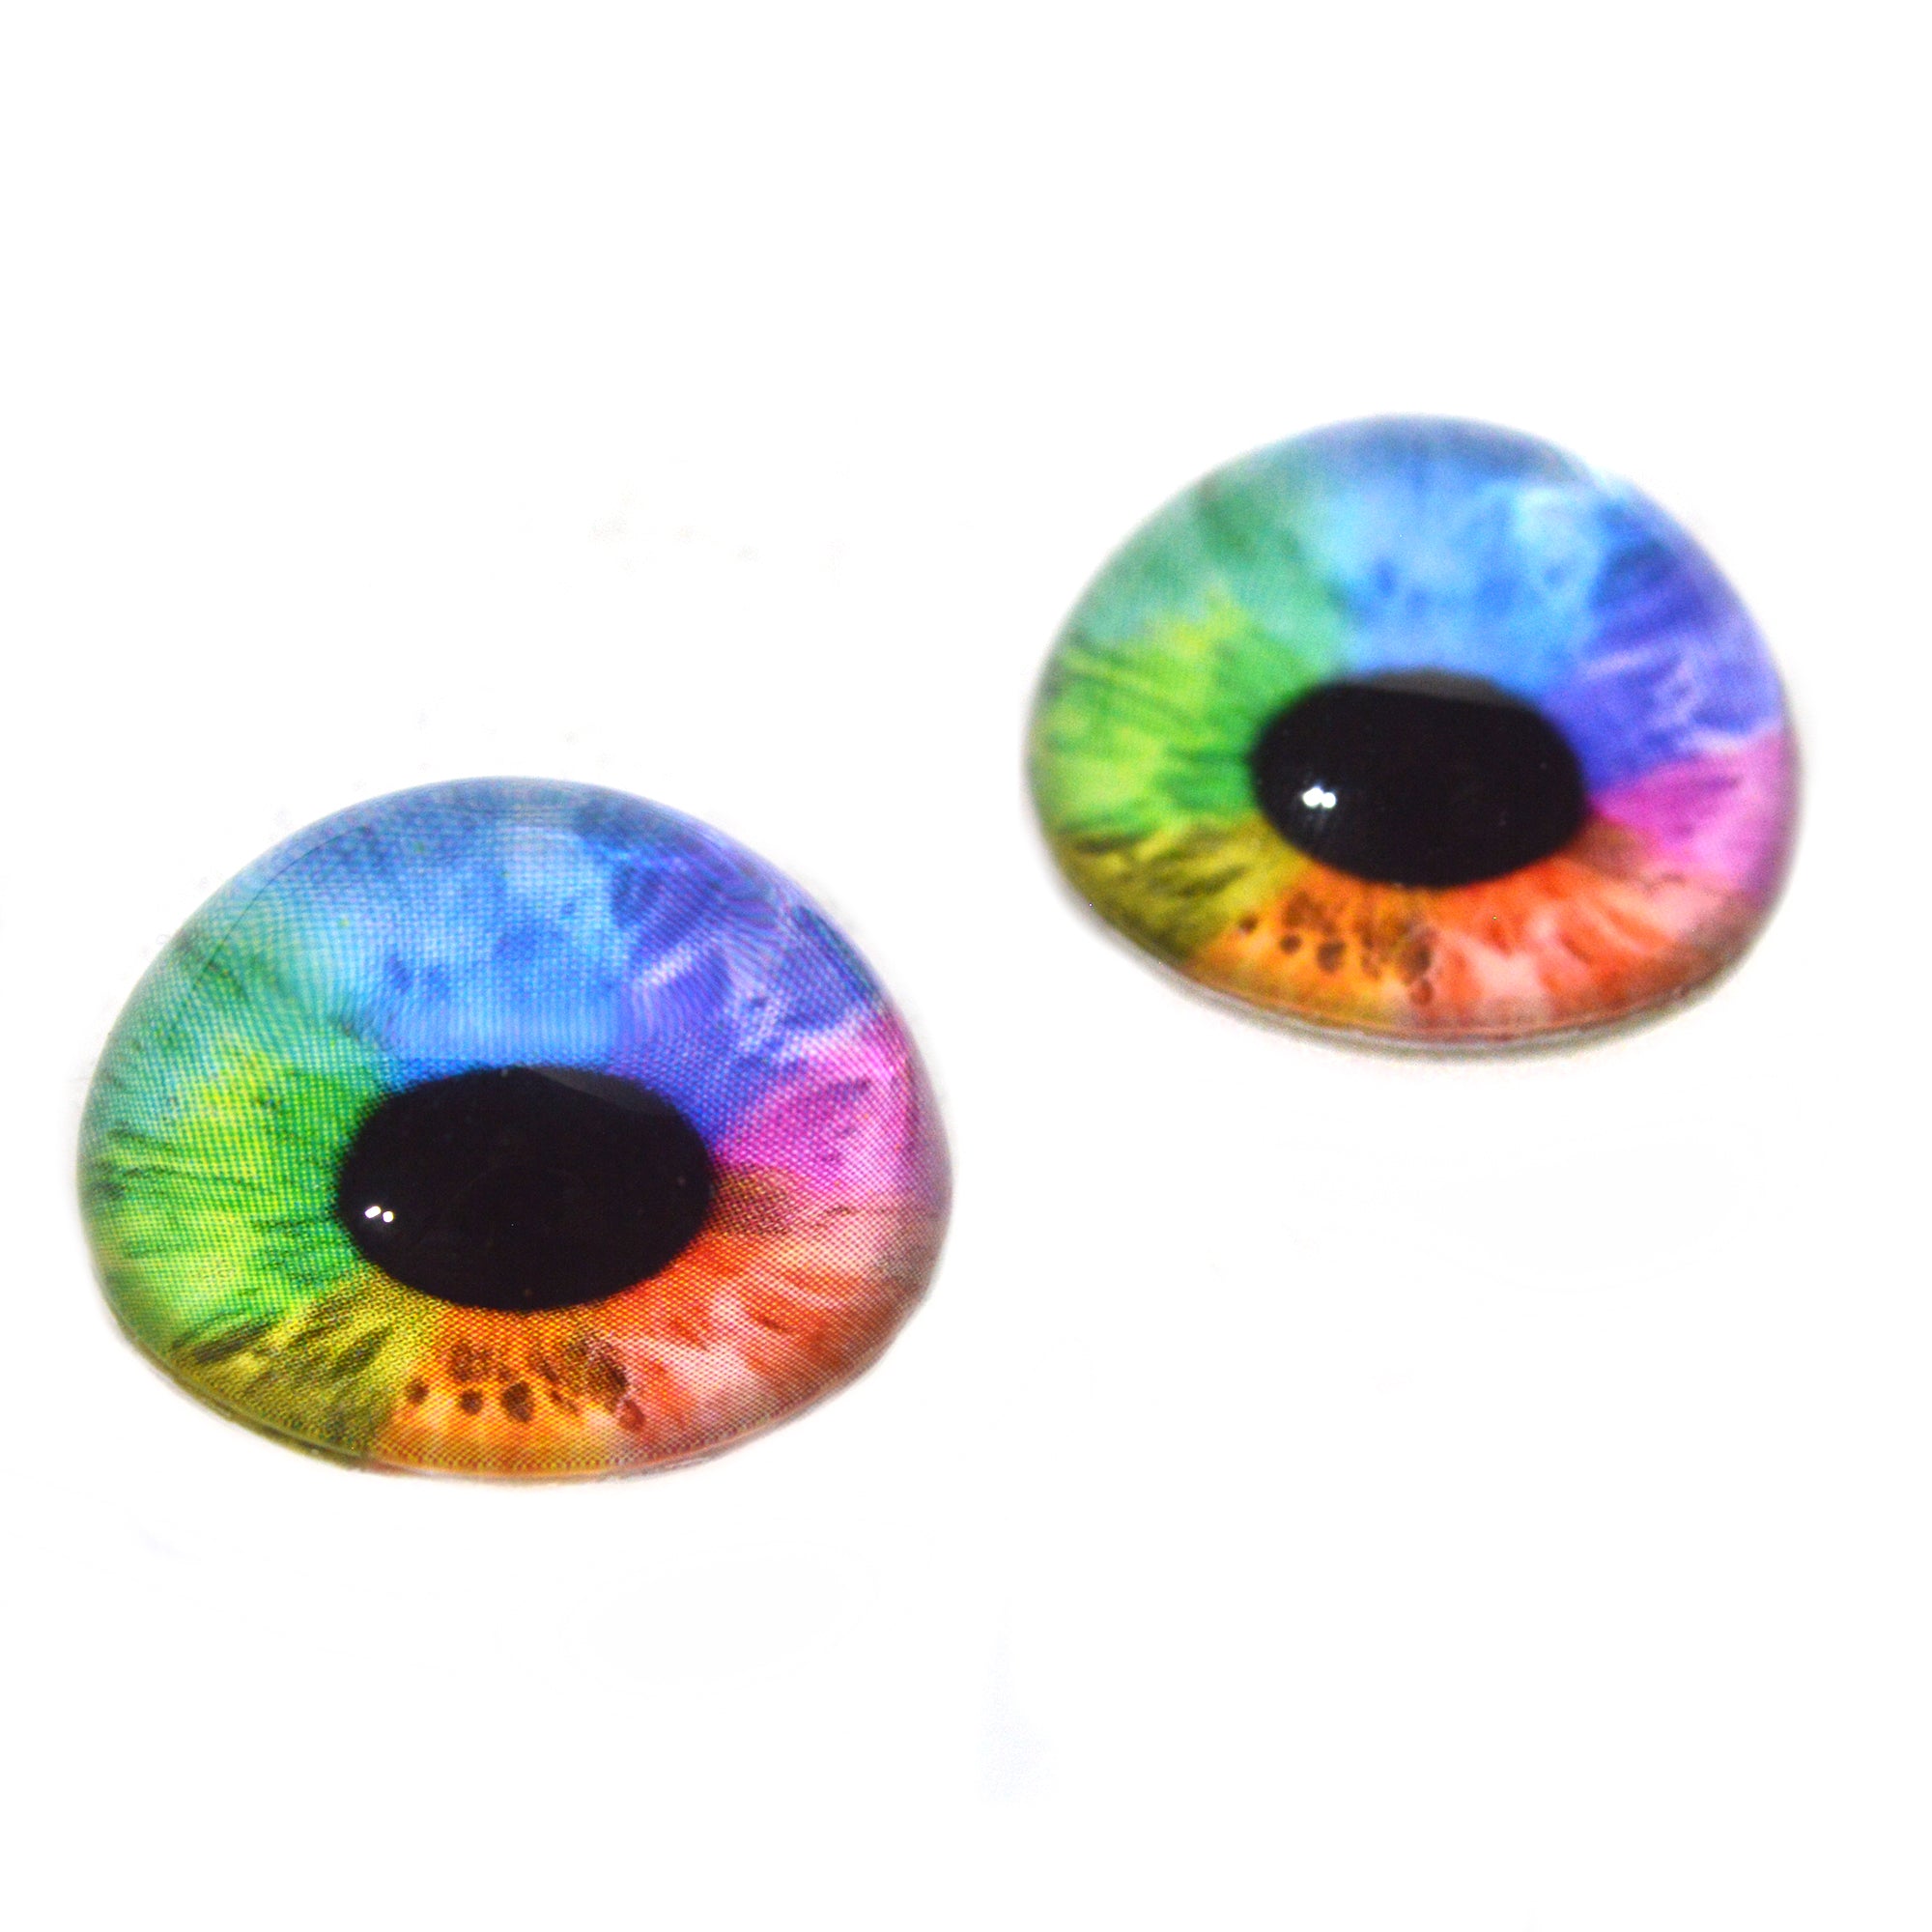 High Domed Medium Brown Human Glass Eyes – Handmade Glass Eyes